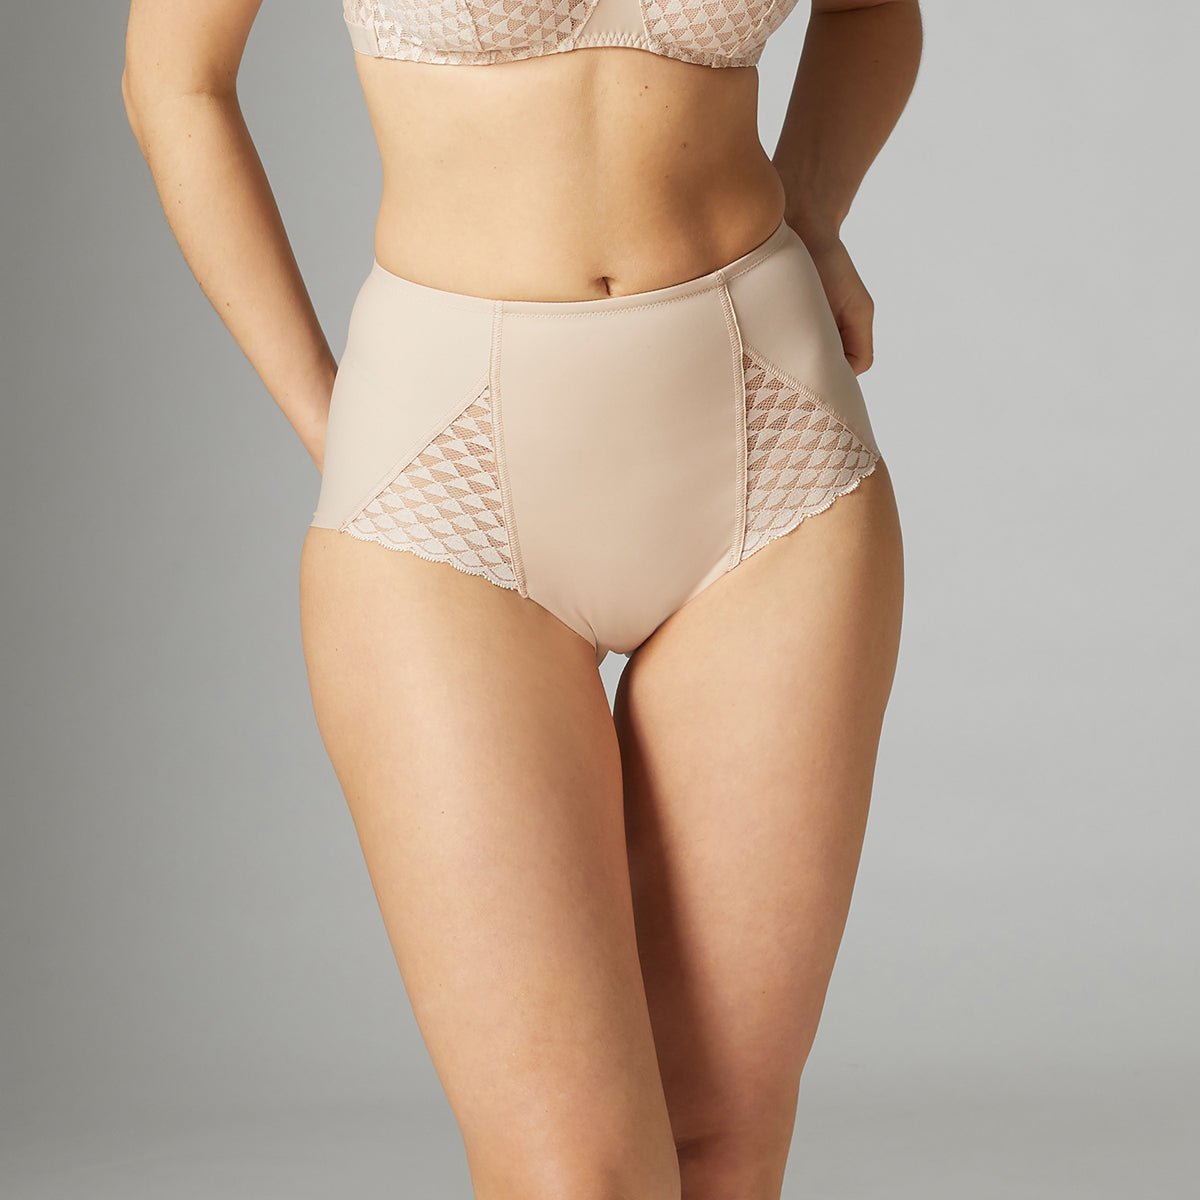 Simone Perele Top Model Body Shaper High Waist Brief Size Small New